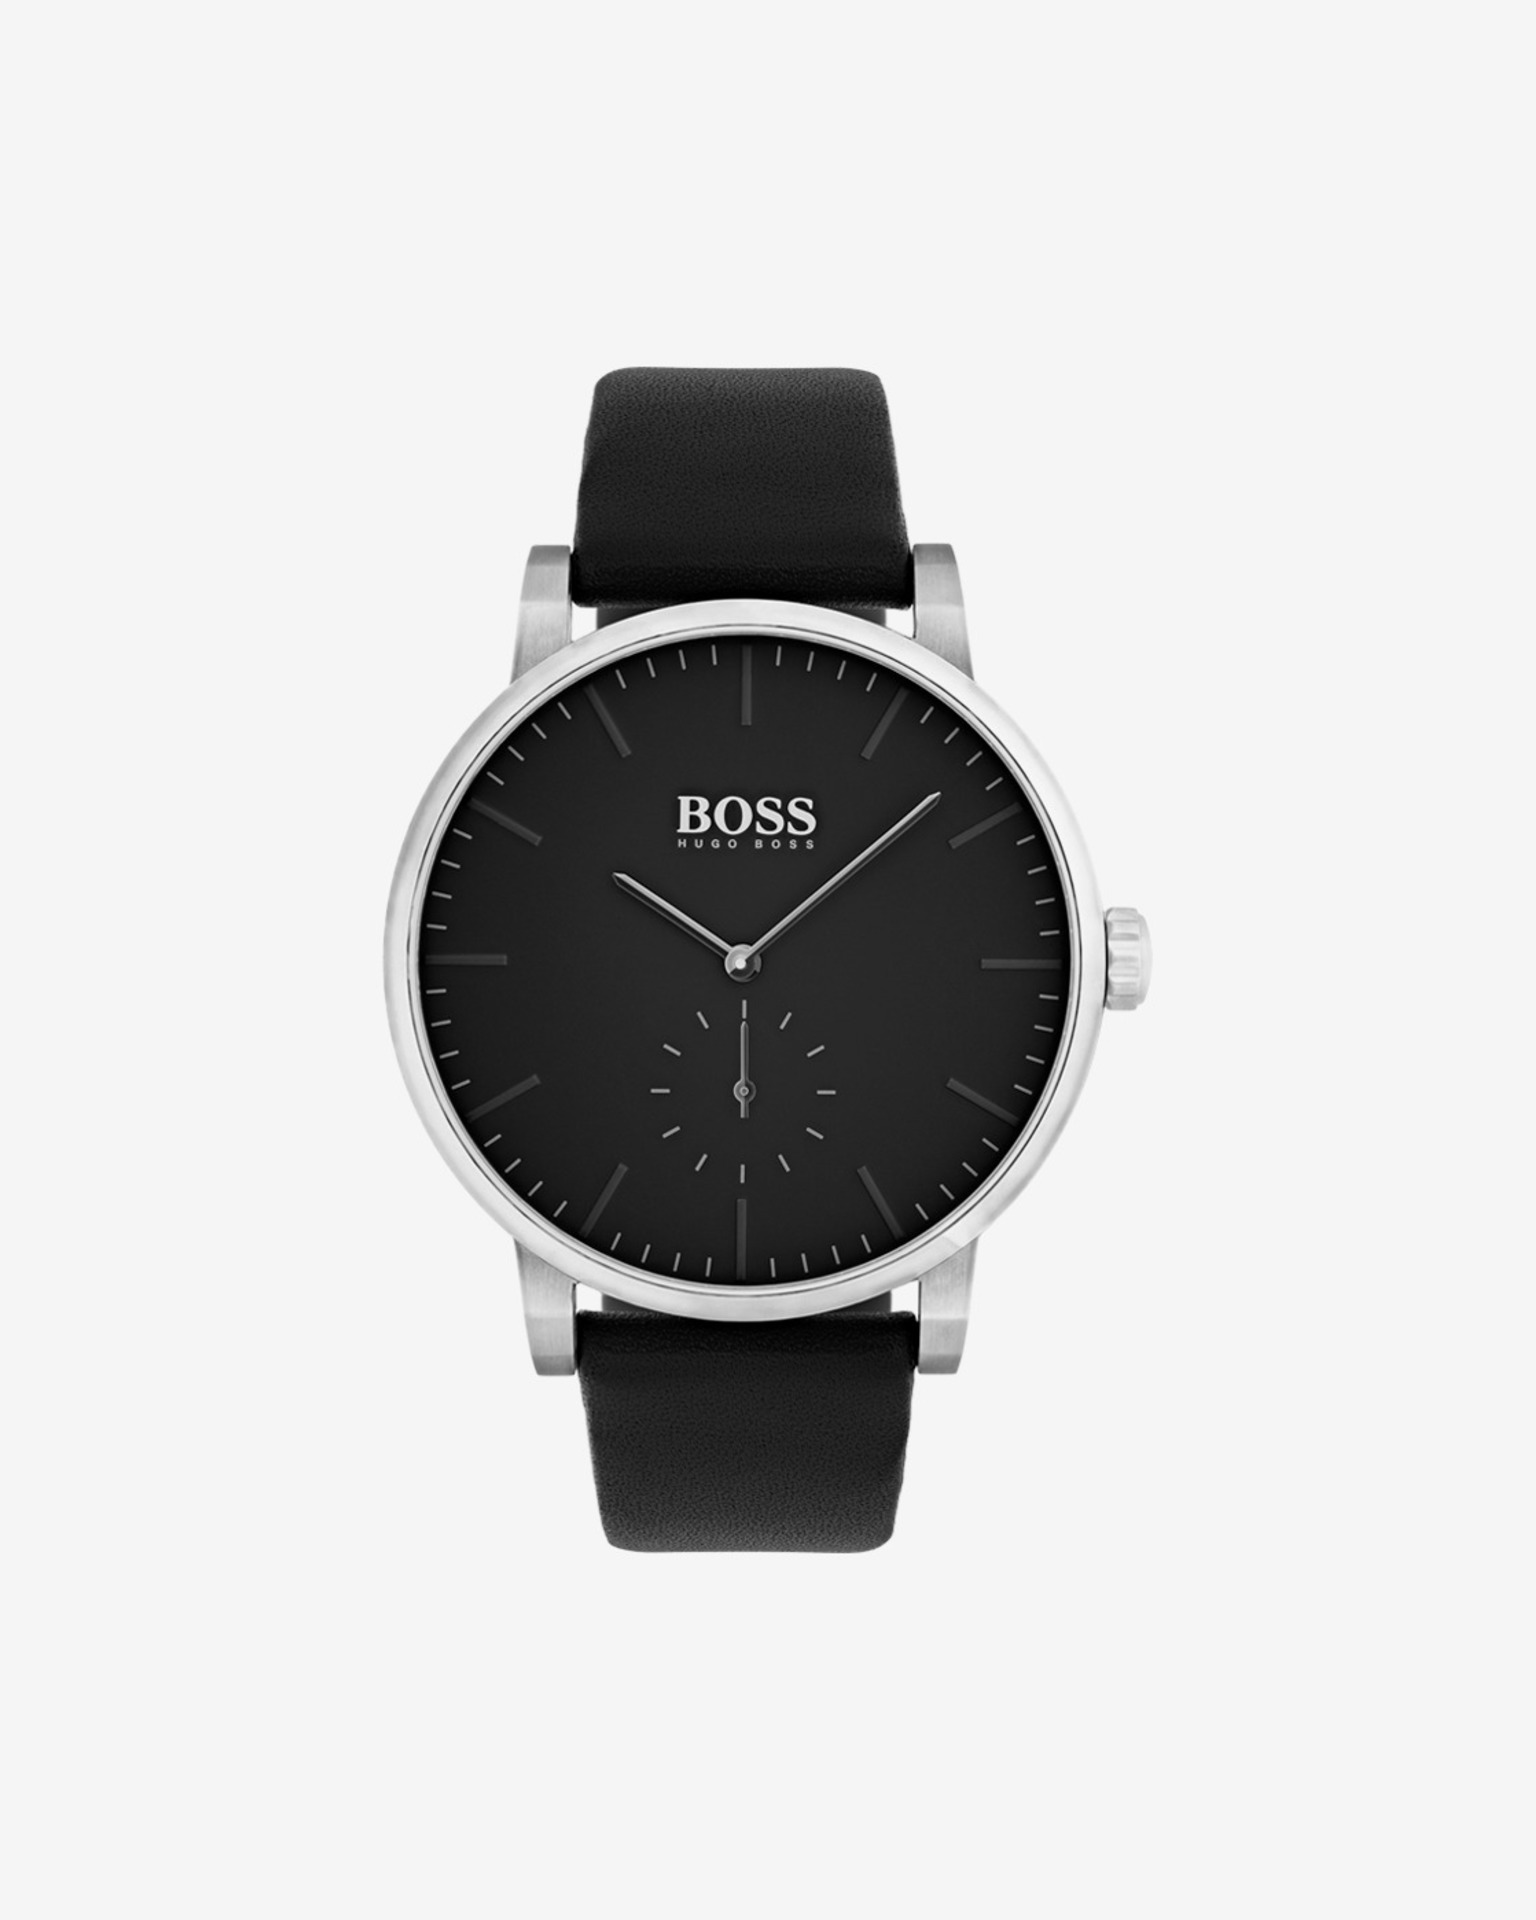 Hugo Boss - Watches Bibloo.com